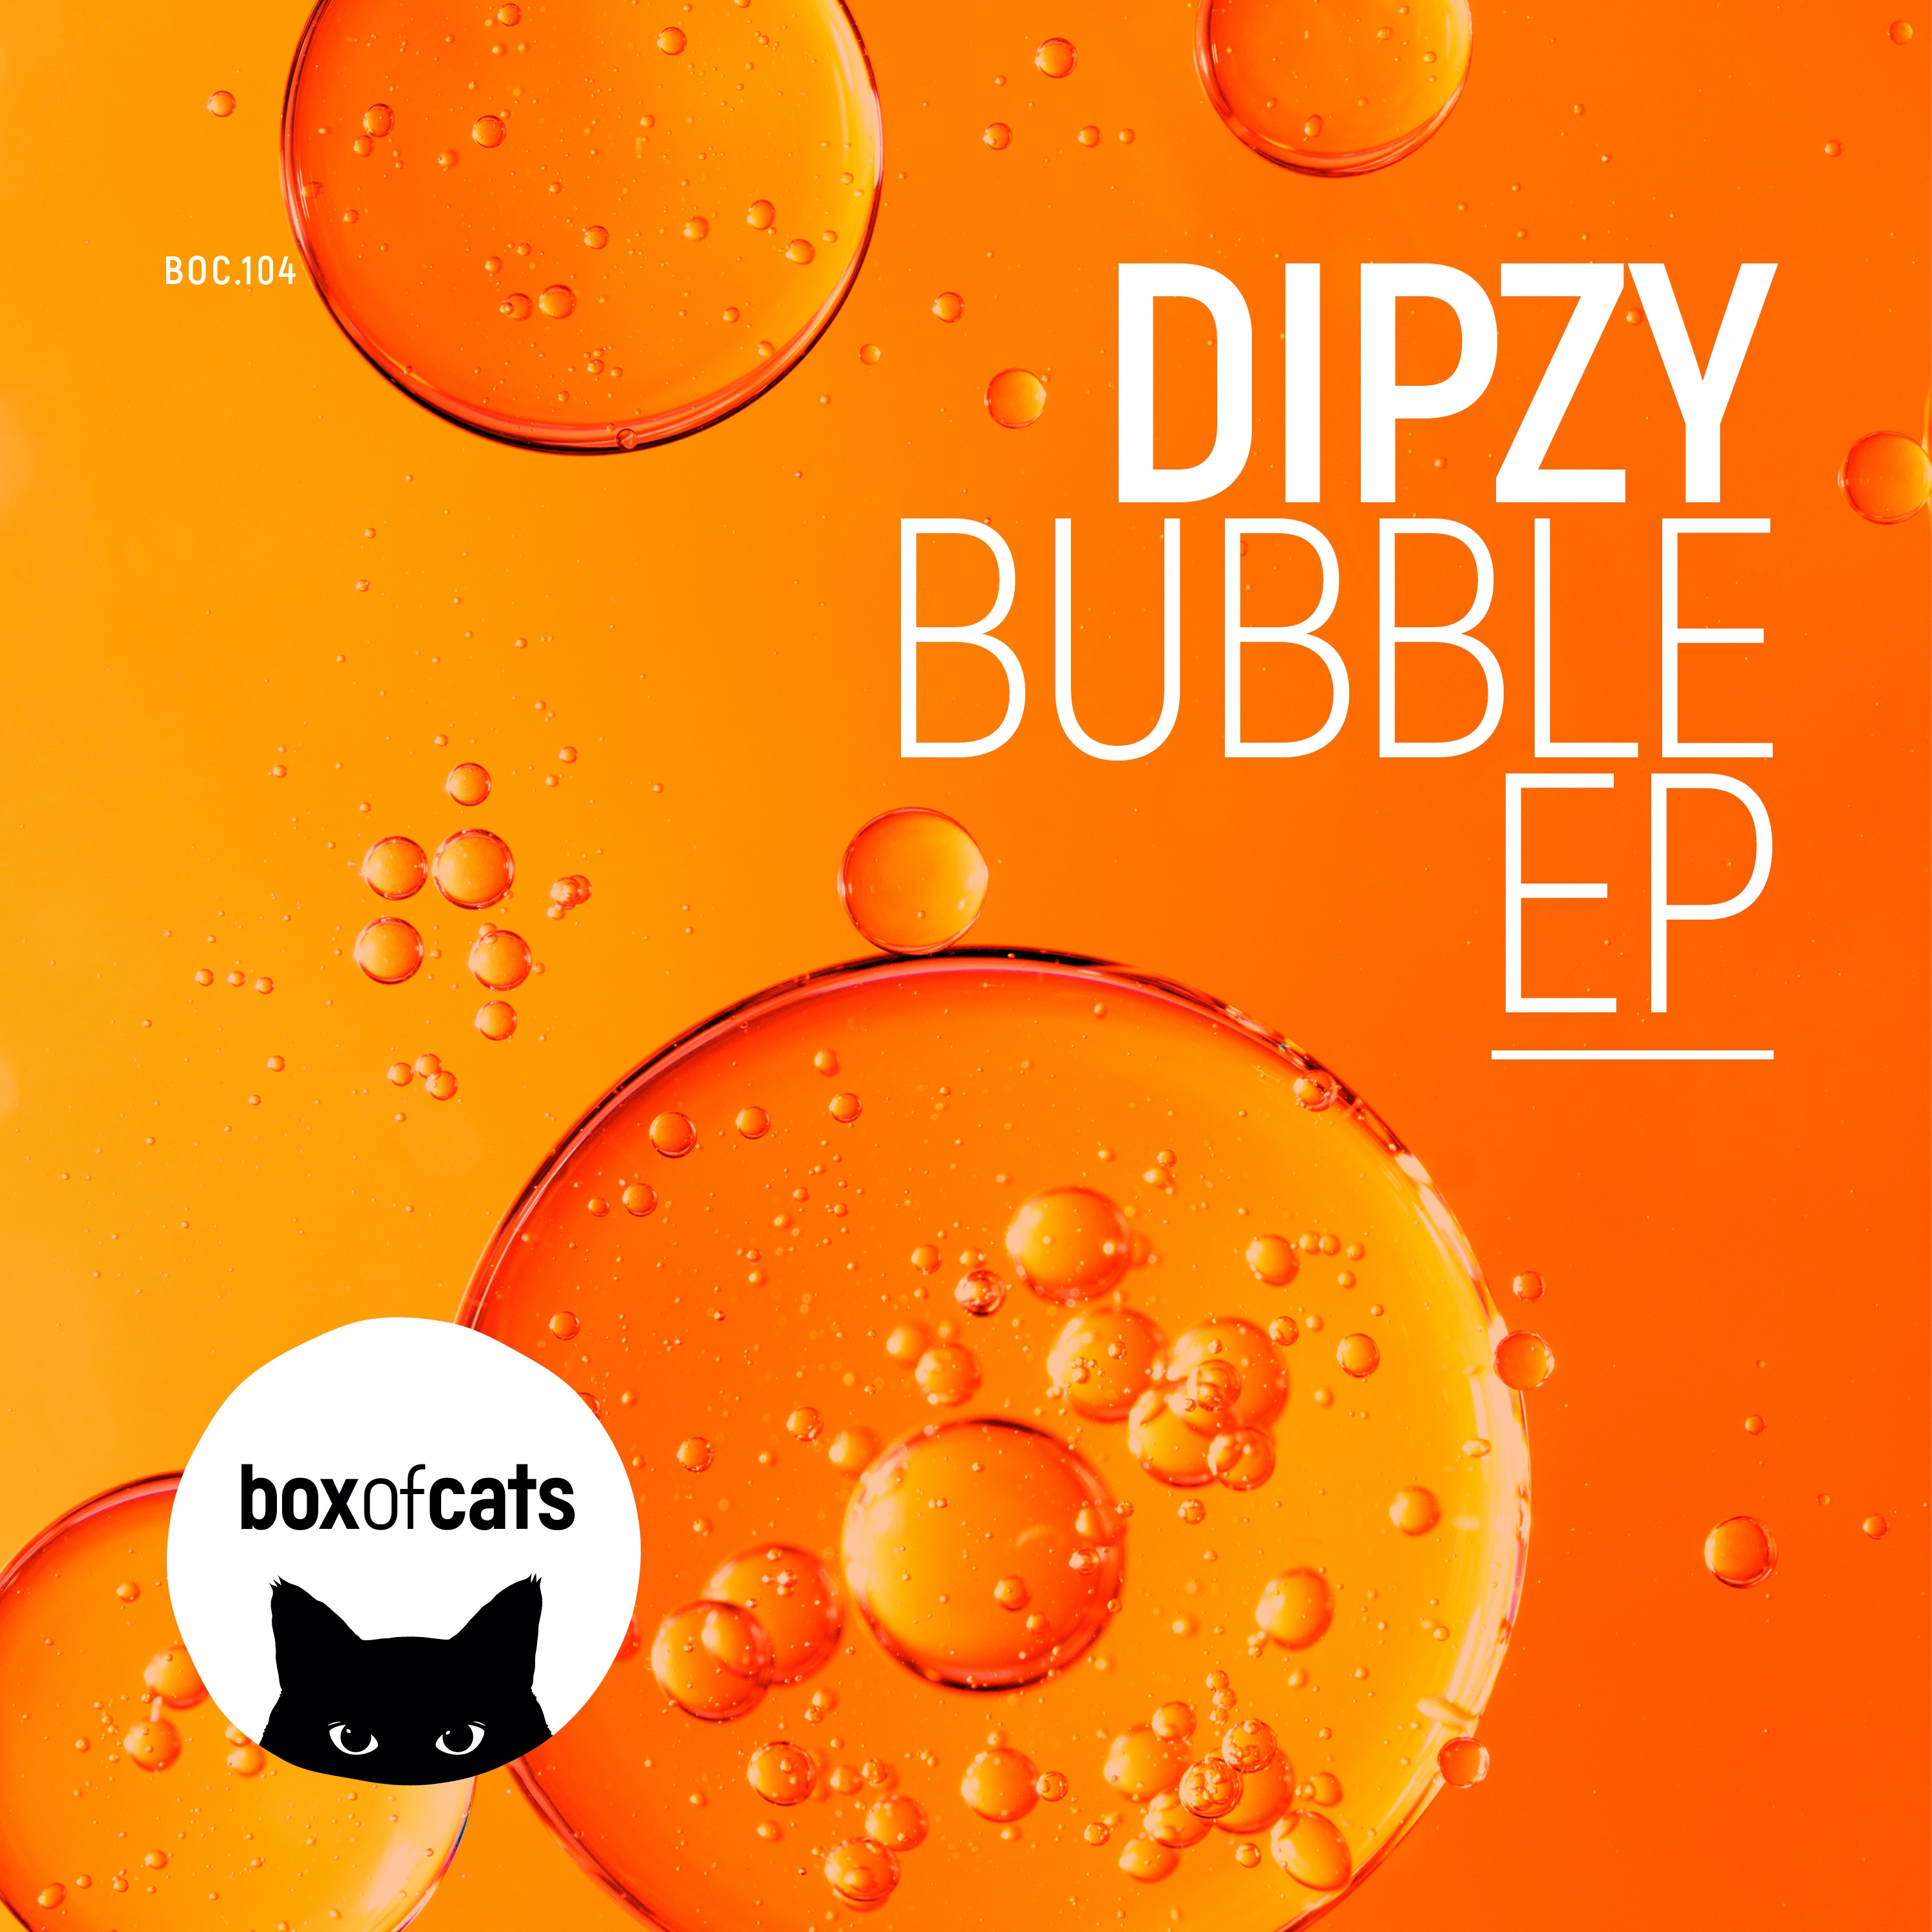 Skinuti Dipzy - Bubble (BOC104)